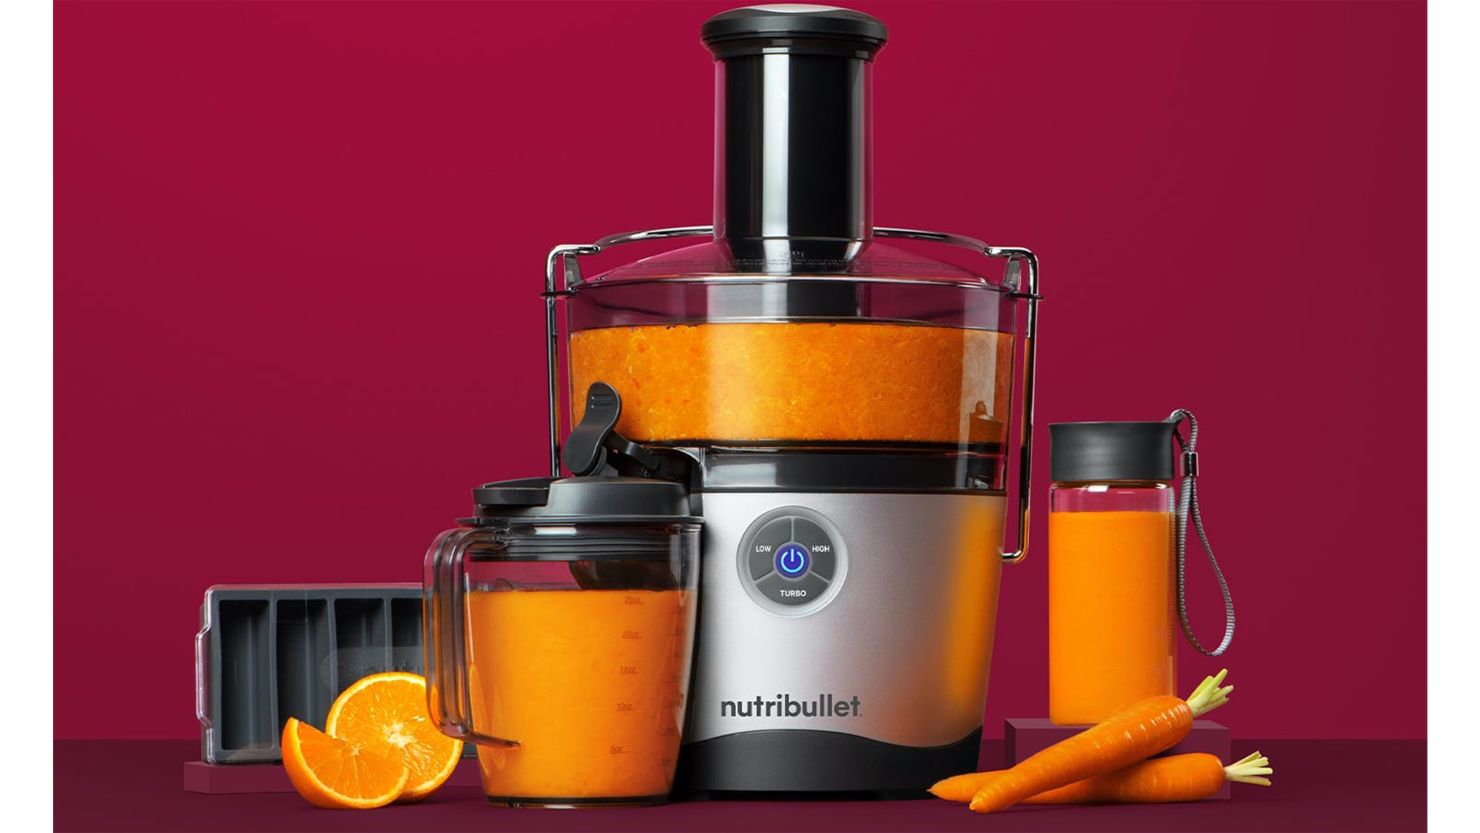 NutriBullet Juicer review: a great juicer that's so affordable – classic  Nutribullet!